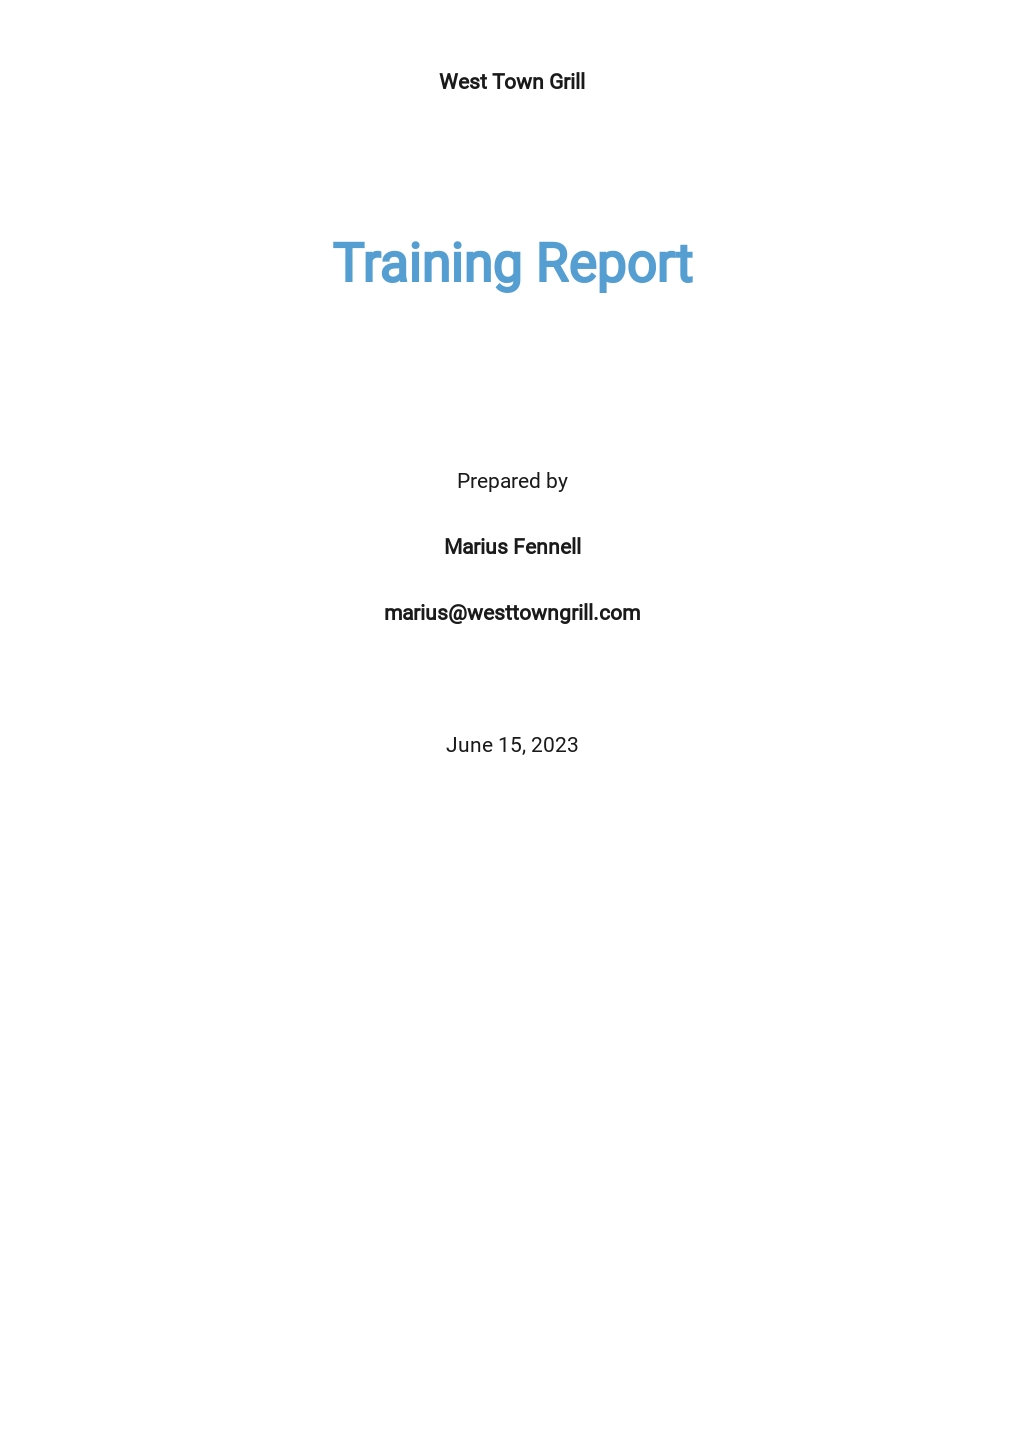 Training Report Format Template - Google Docs, Word  Template.net In Training Report Template Format